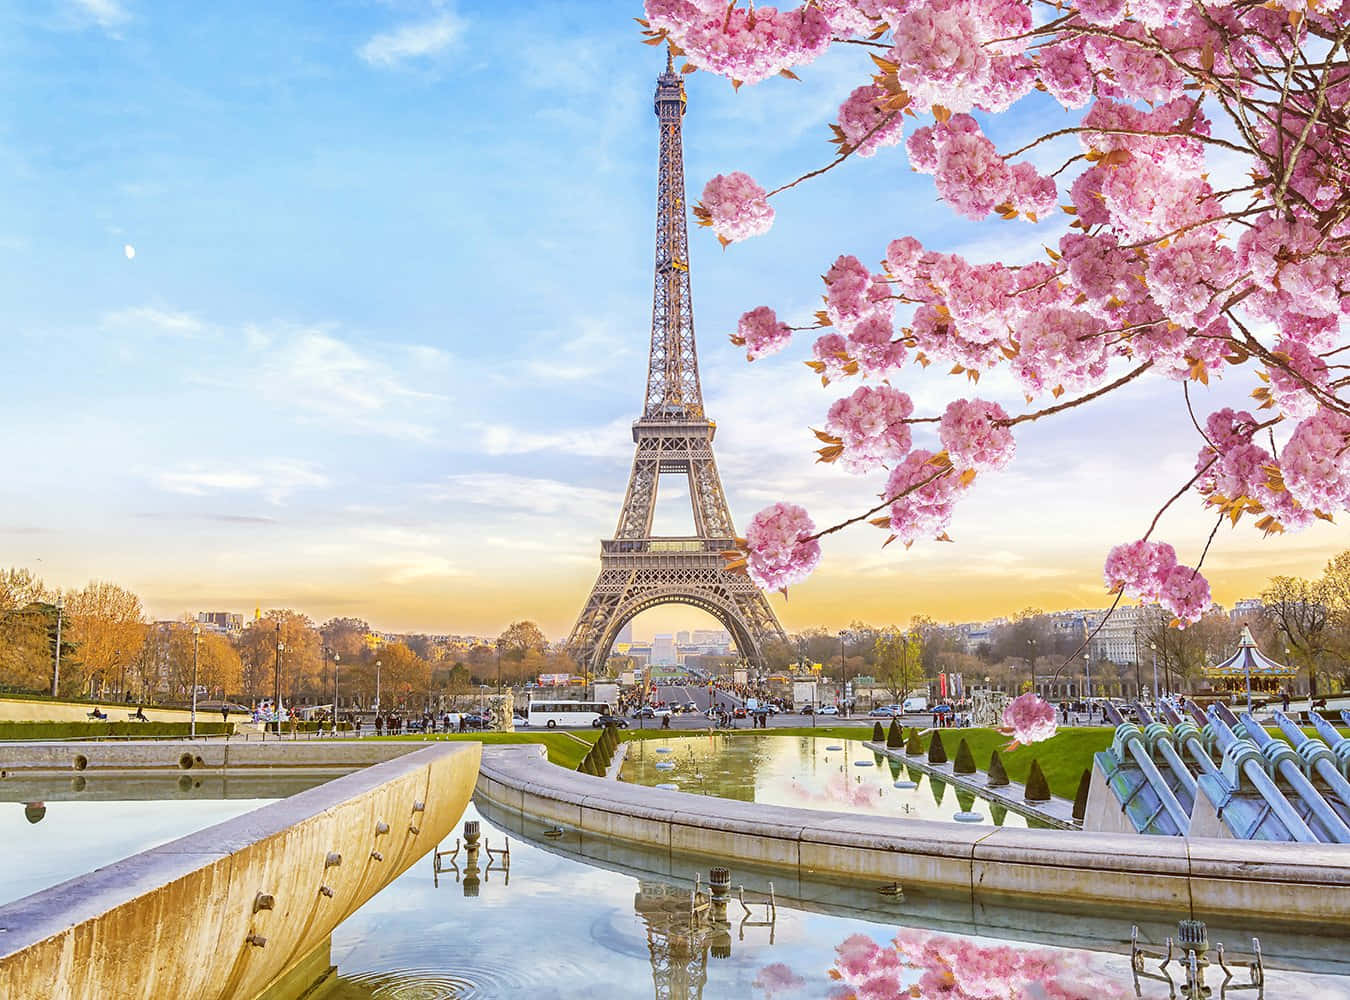 The romantic City of Love: Paris